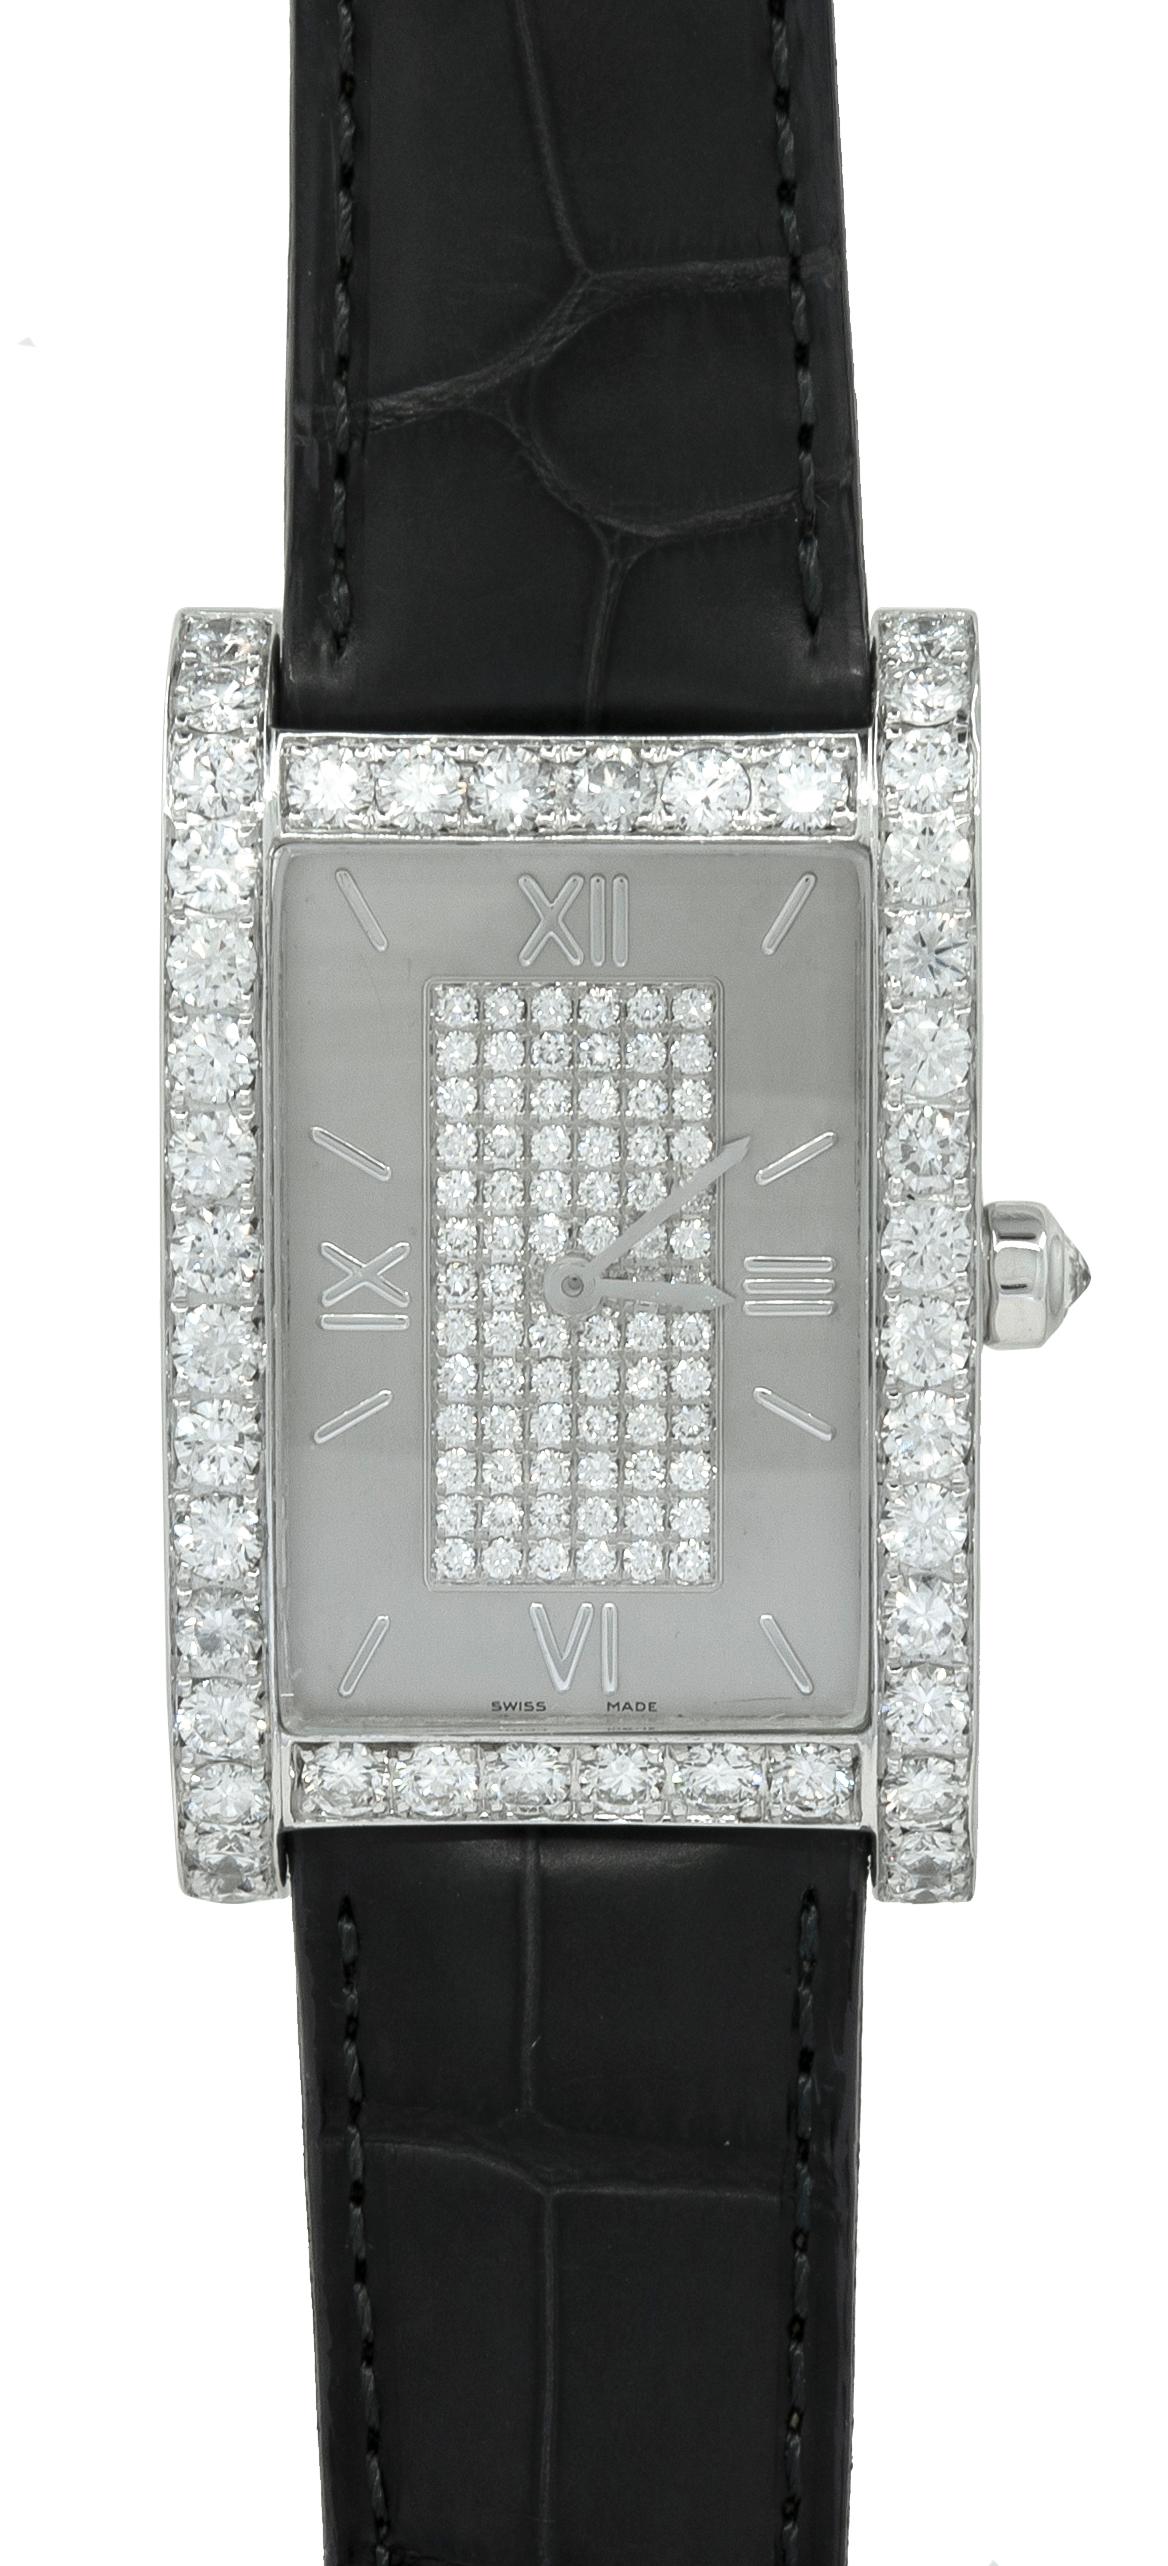 GRAFF Diamond Wrist Watch

An 18k white gold watch, set with round brilliant-cut diamonds and alligator strap signed Graff.

 